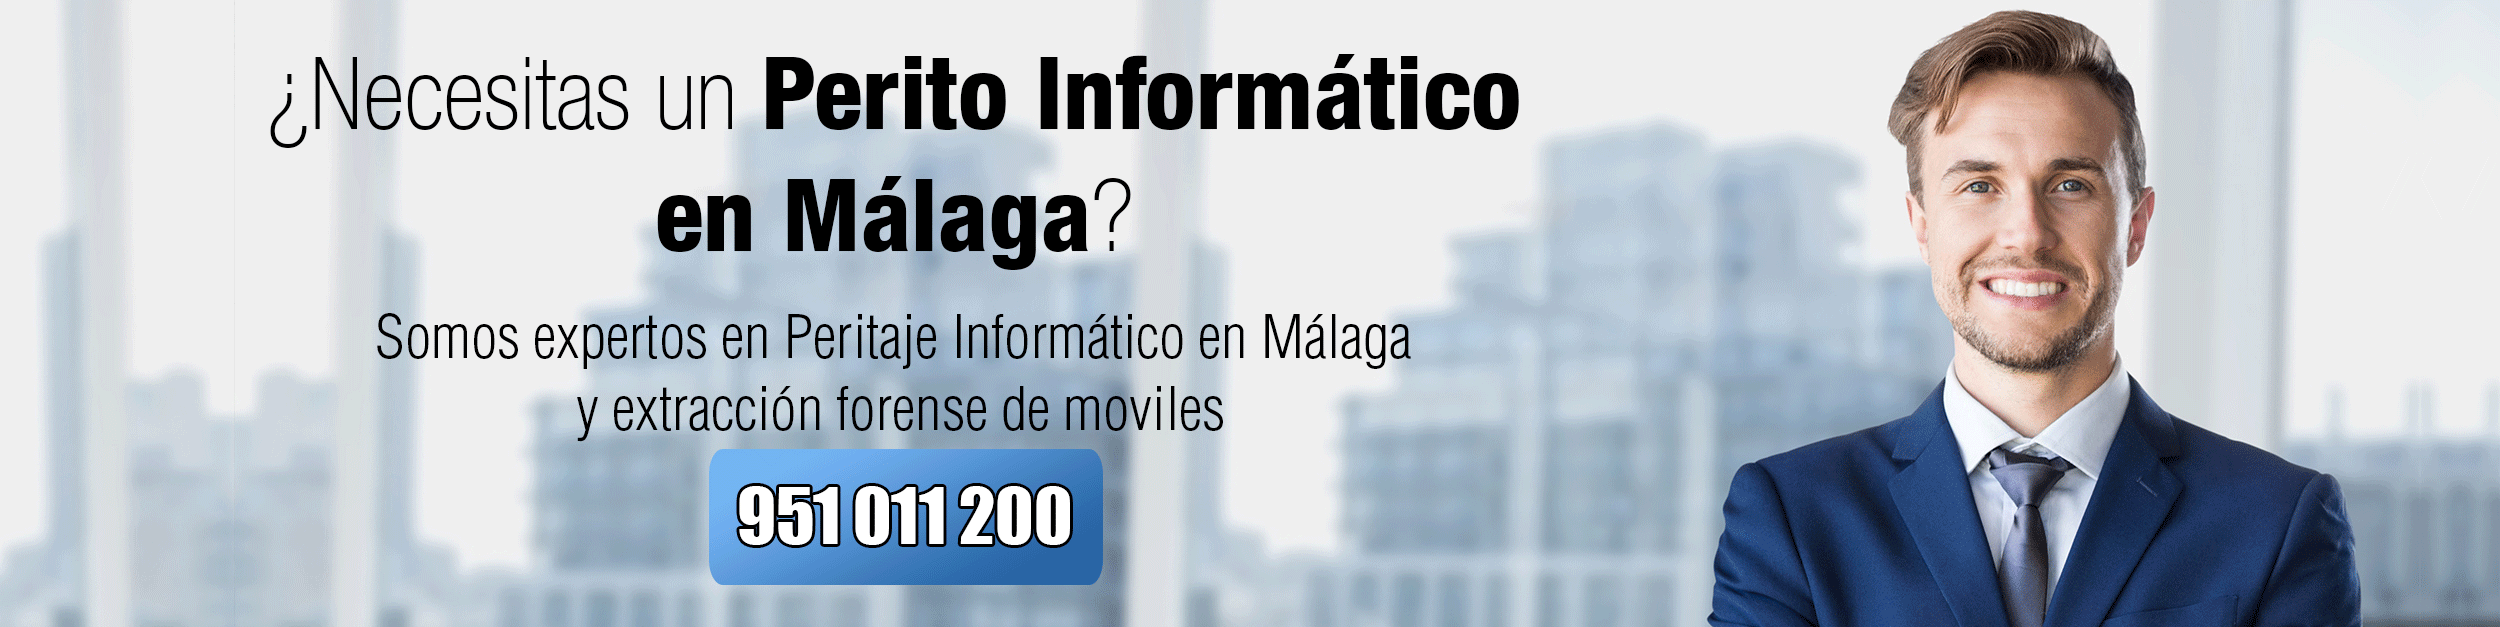 Perito Informático Málaga